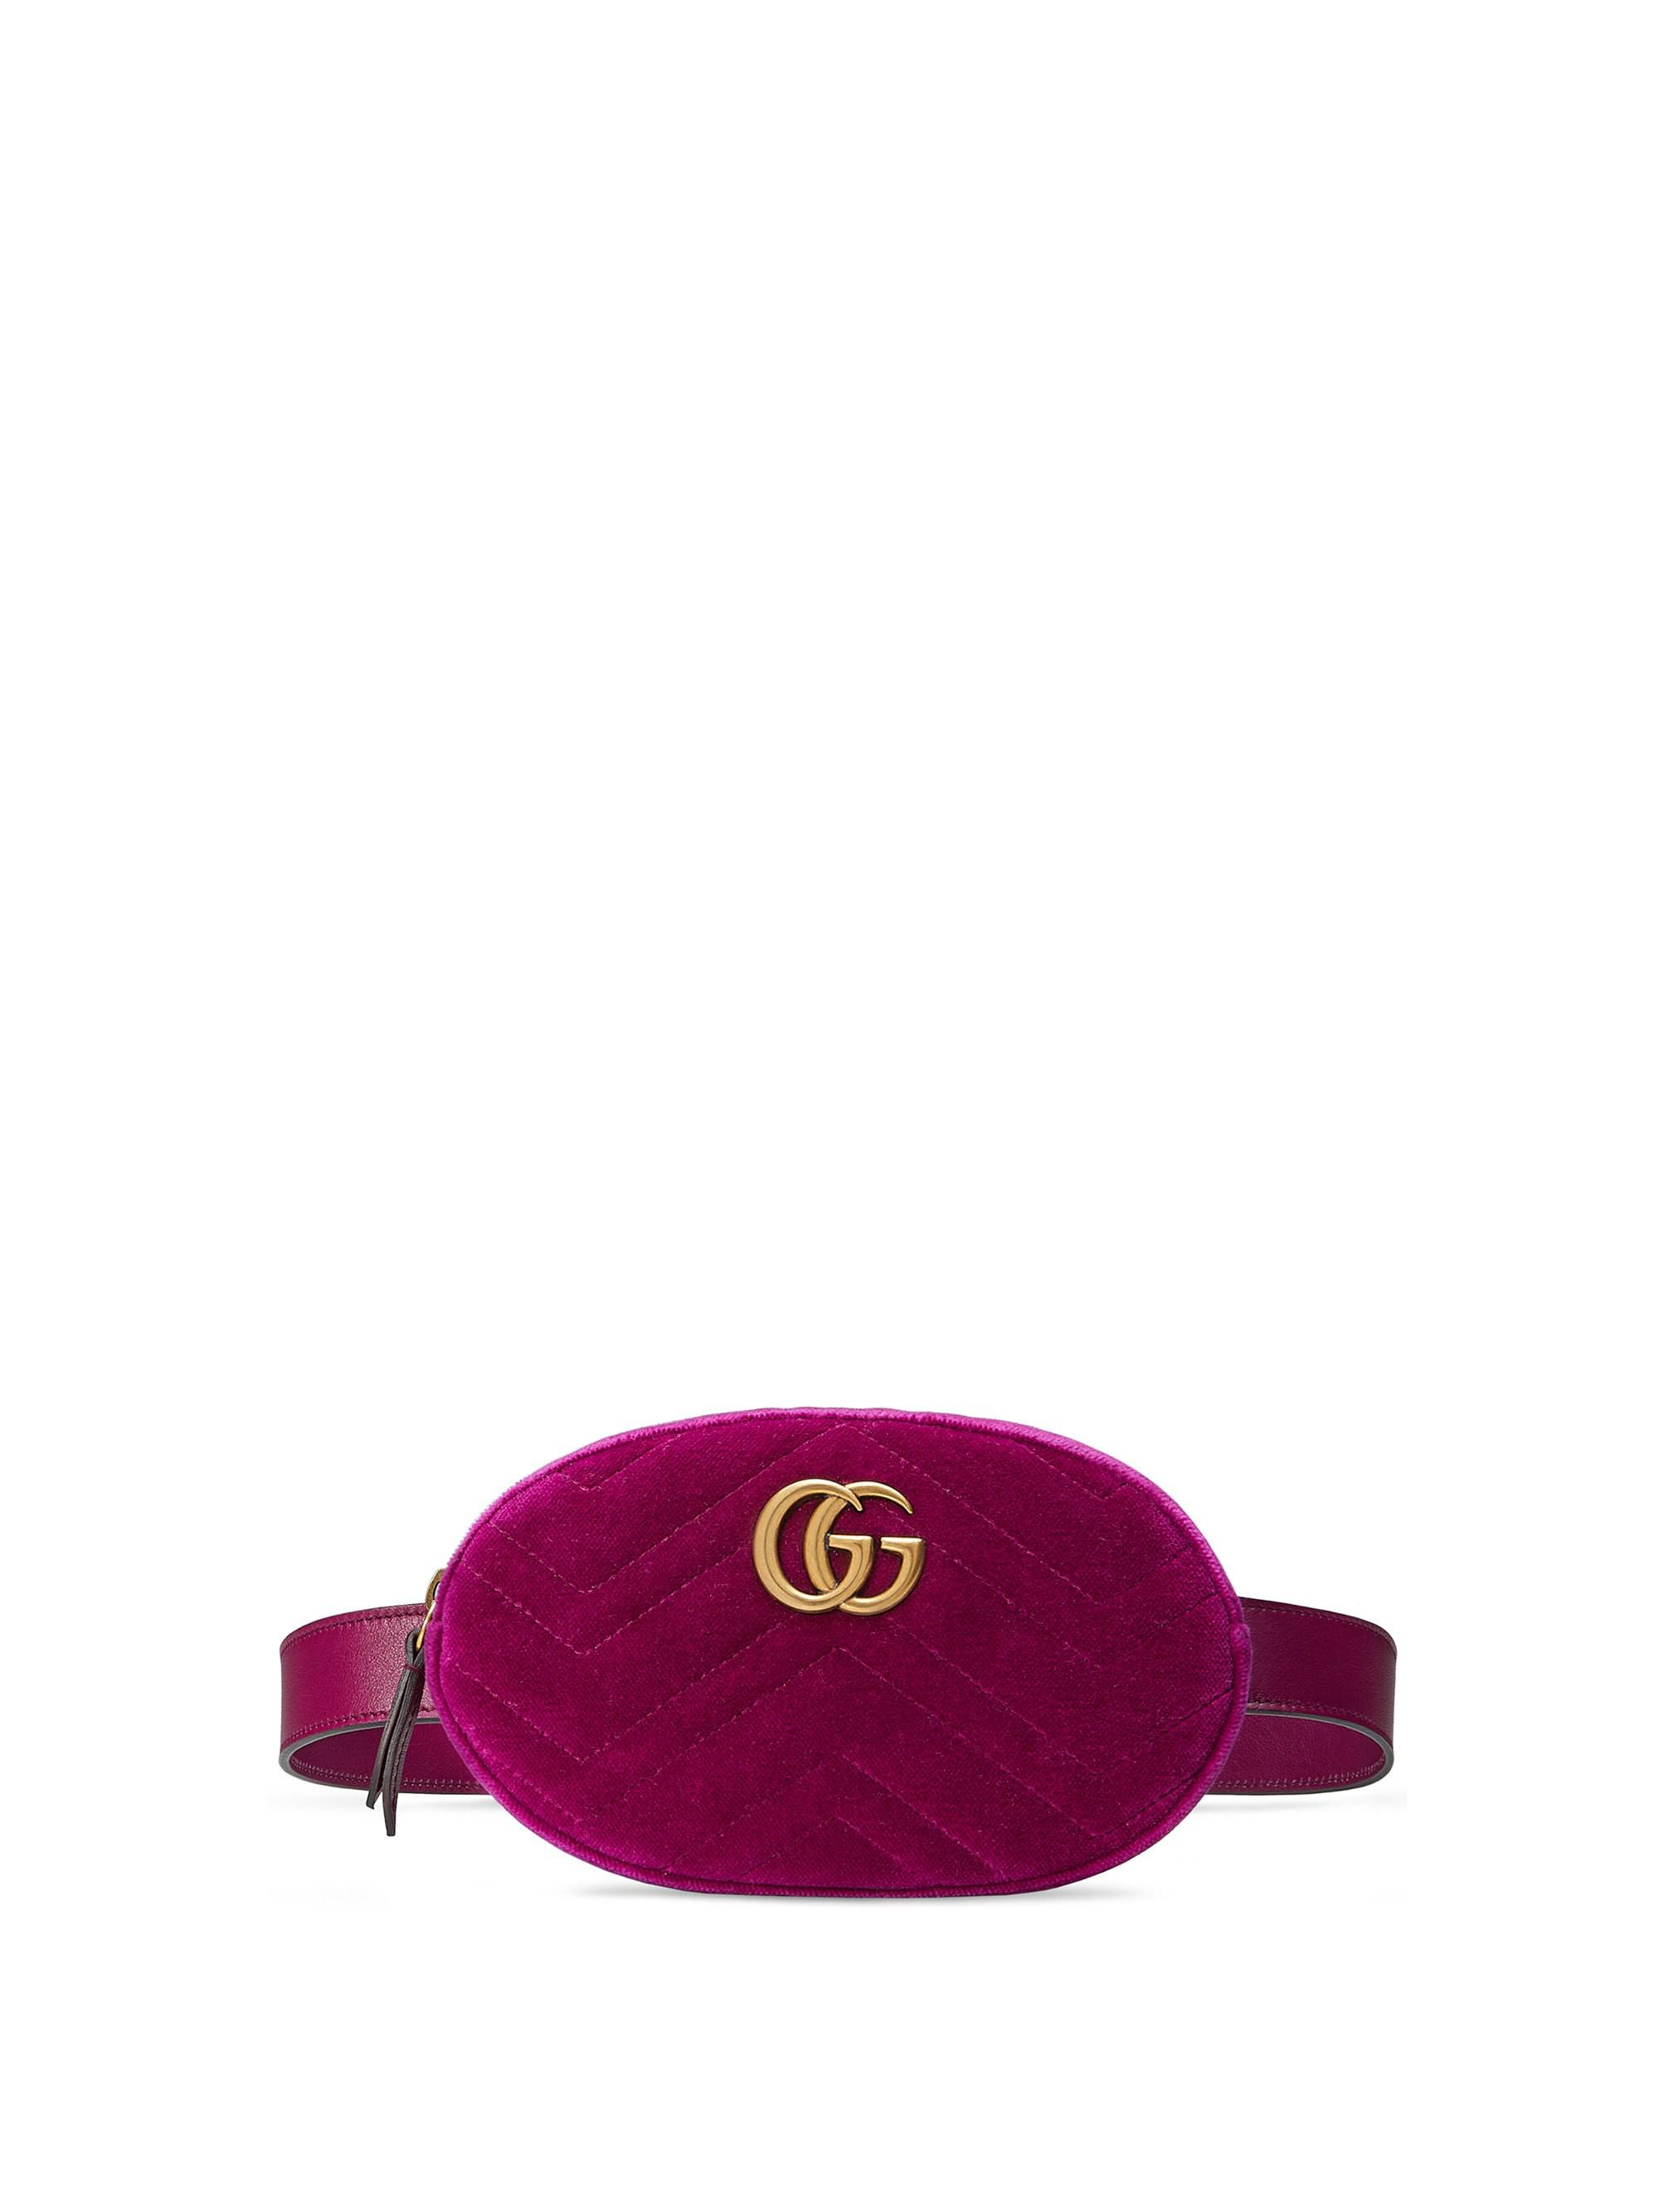 Gucci GG Marmont Matelassé Velvet Belt Bag in Fuchsia (Purple) - Lyst